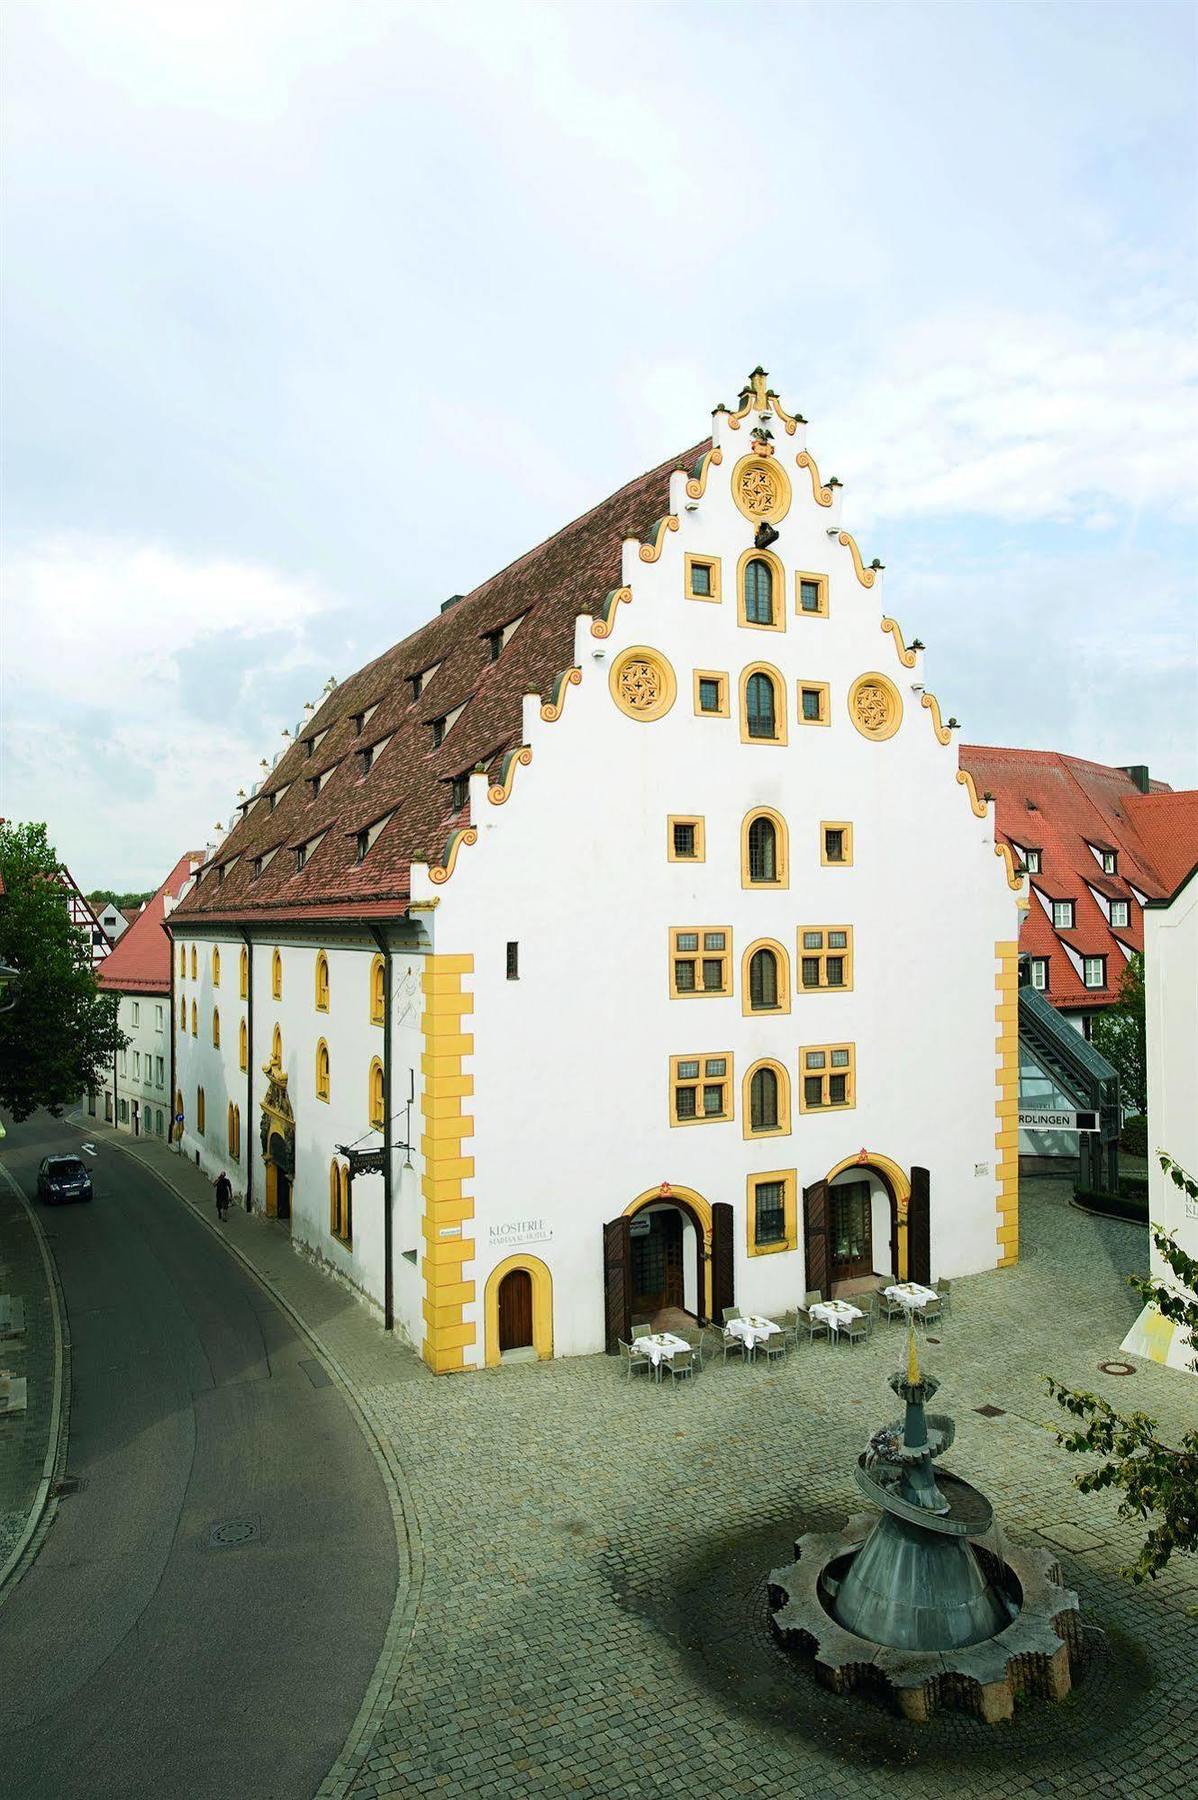 Hotel Klosterle Nordlingen Nördlingen Dış mekan fotoğraf